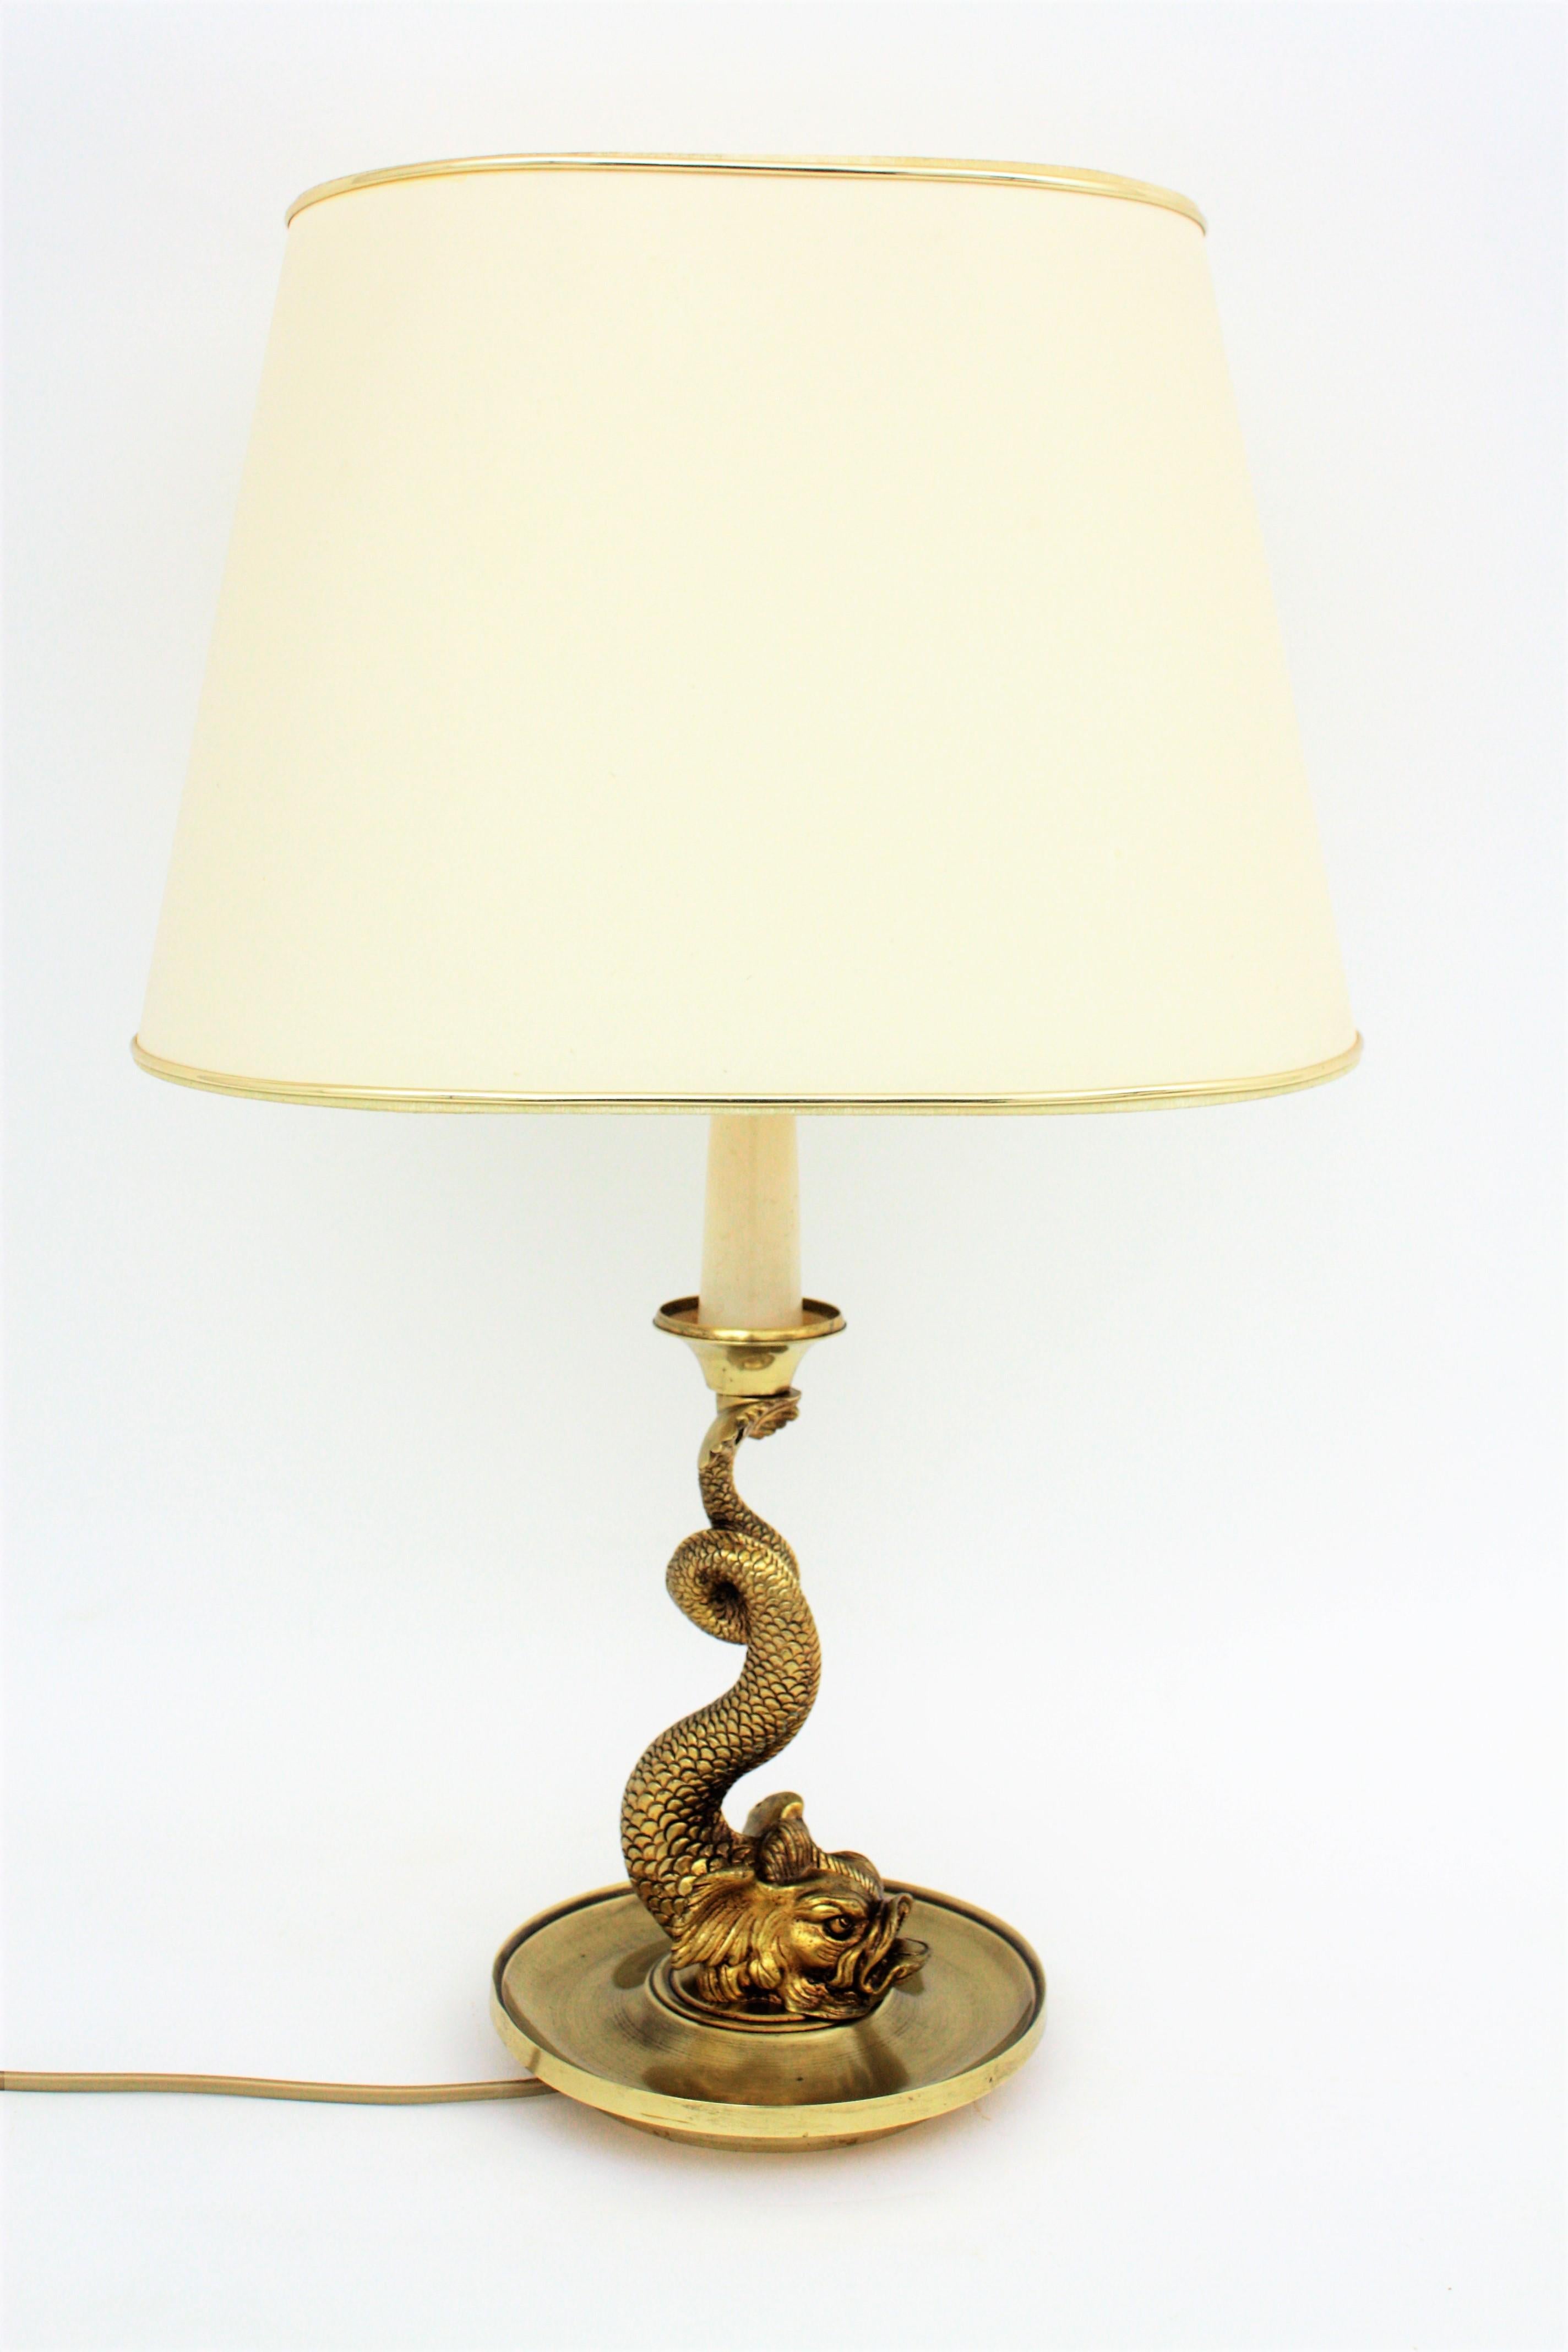 kio table lamp